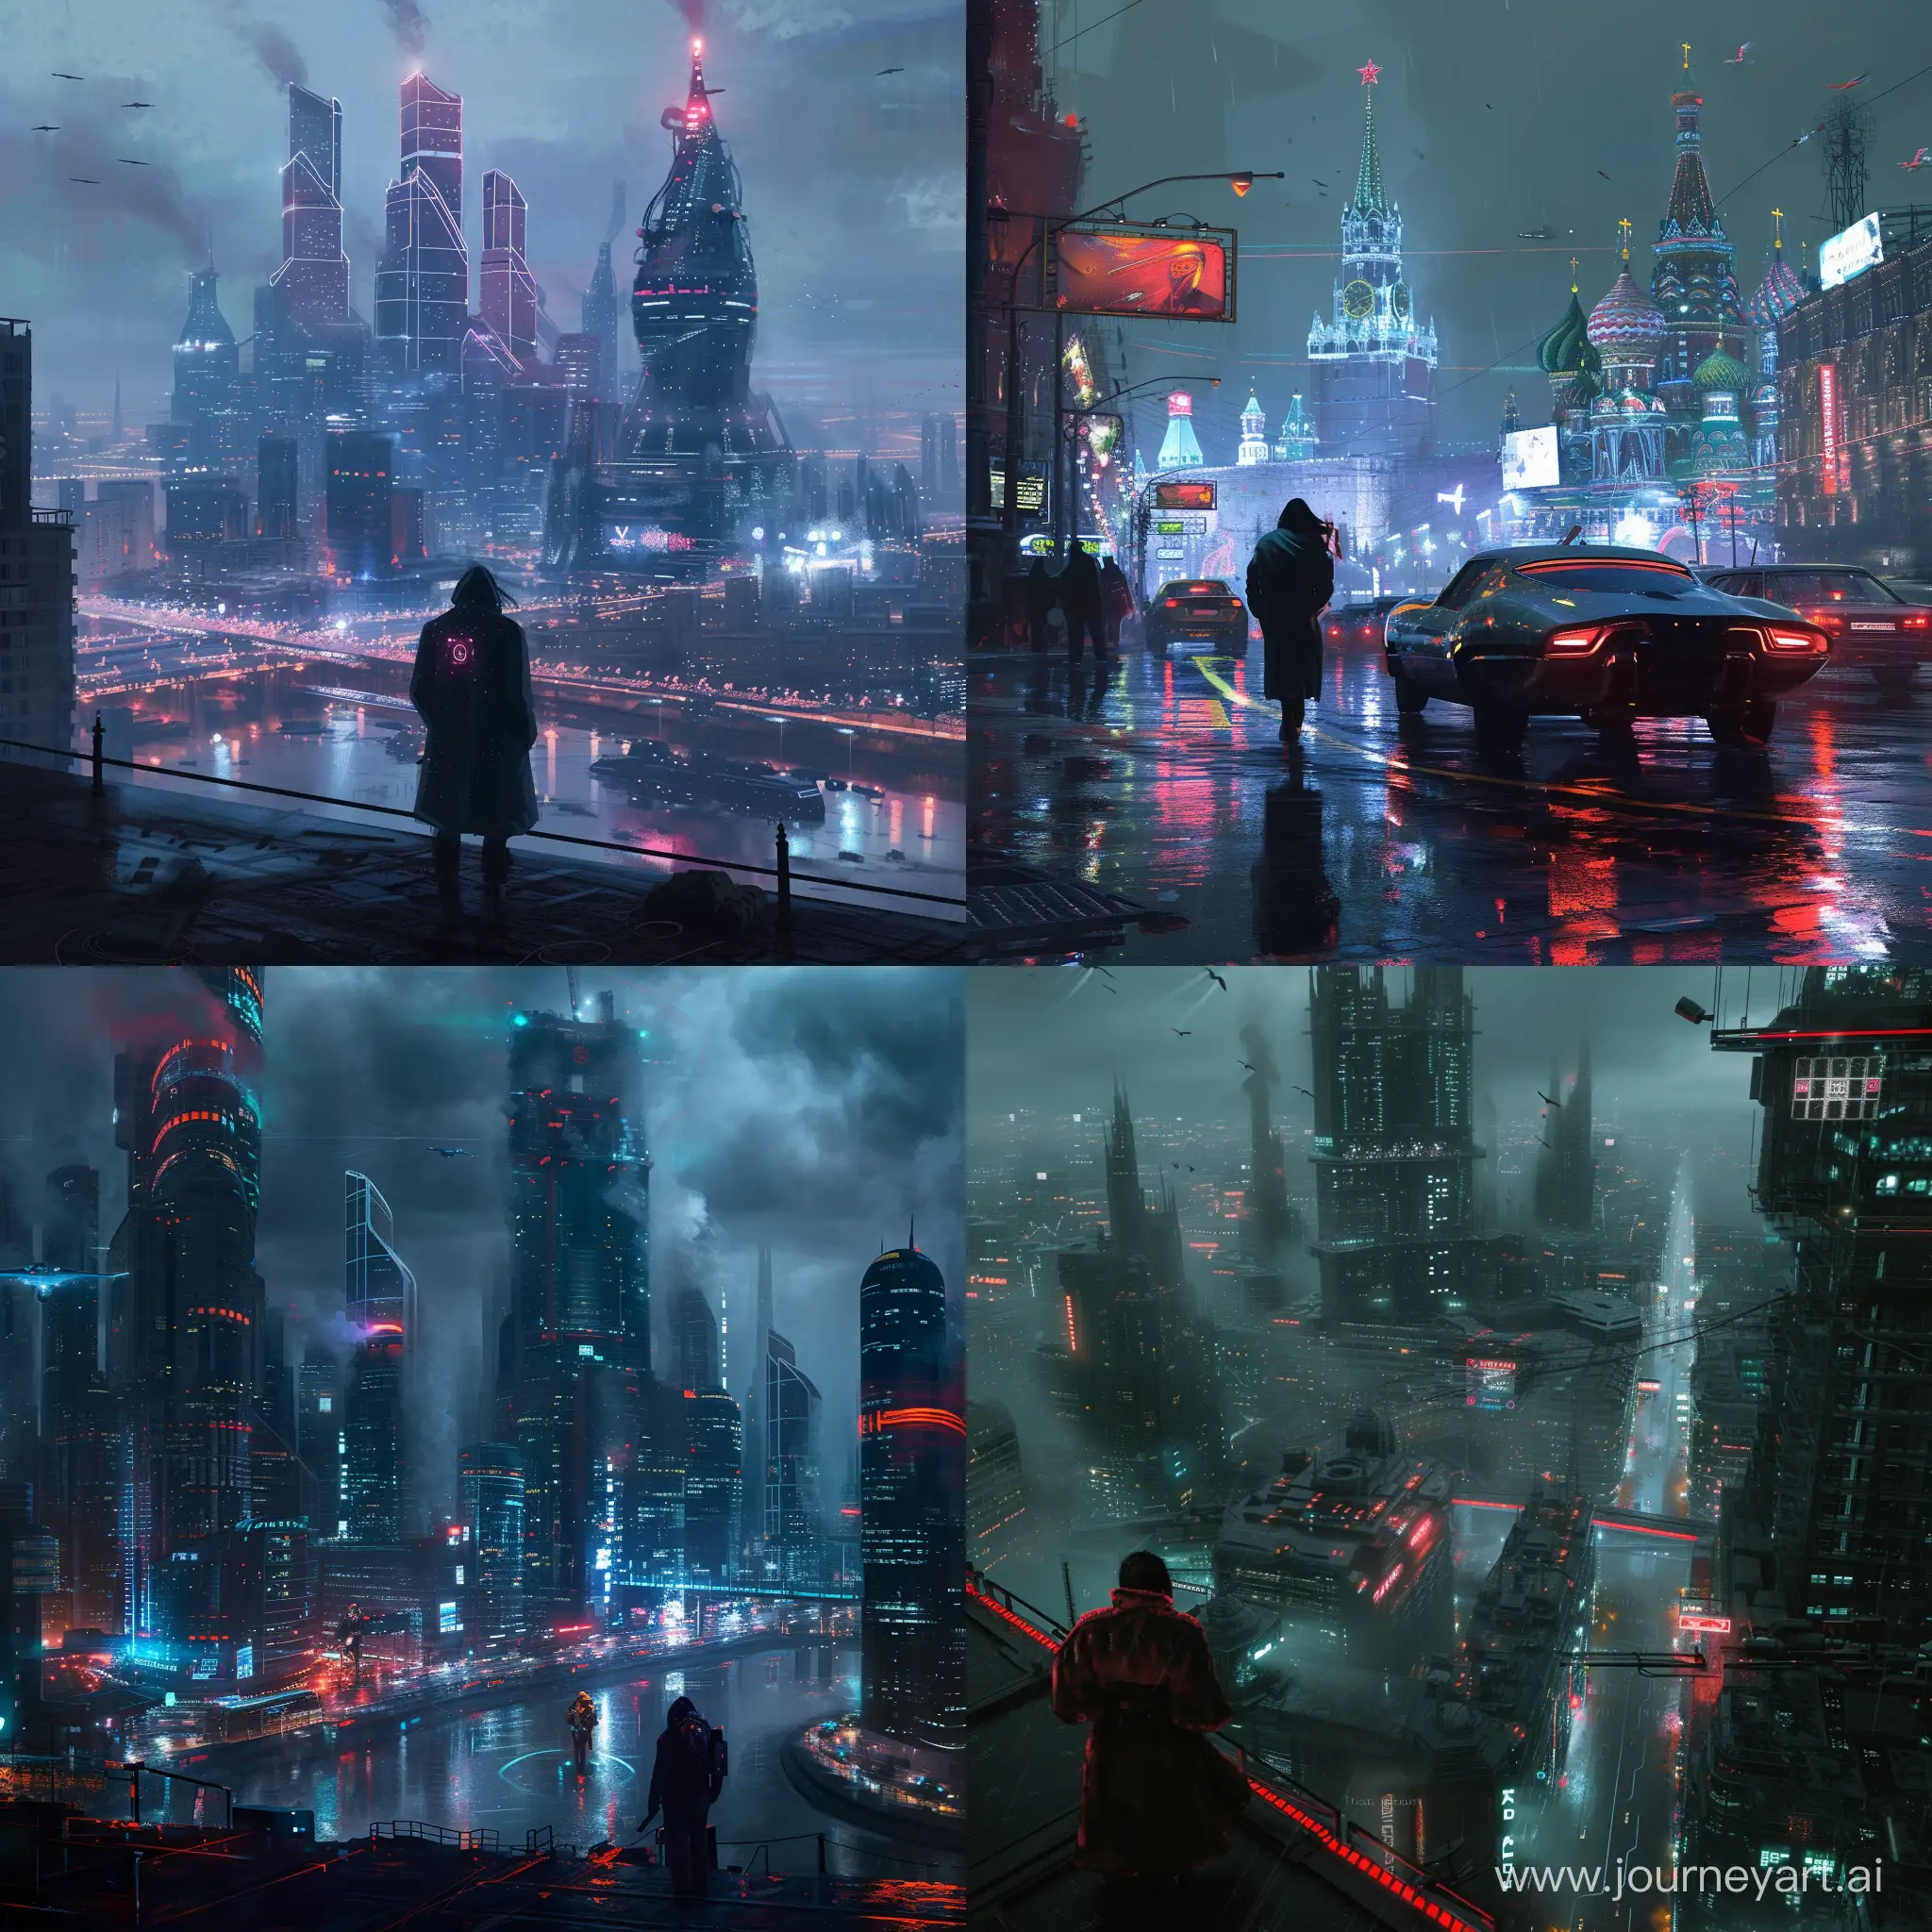 Futuristic-Moscow-in-Postcyberpunk-Biopunk-Imagery